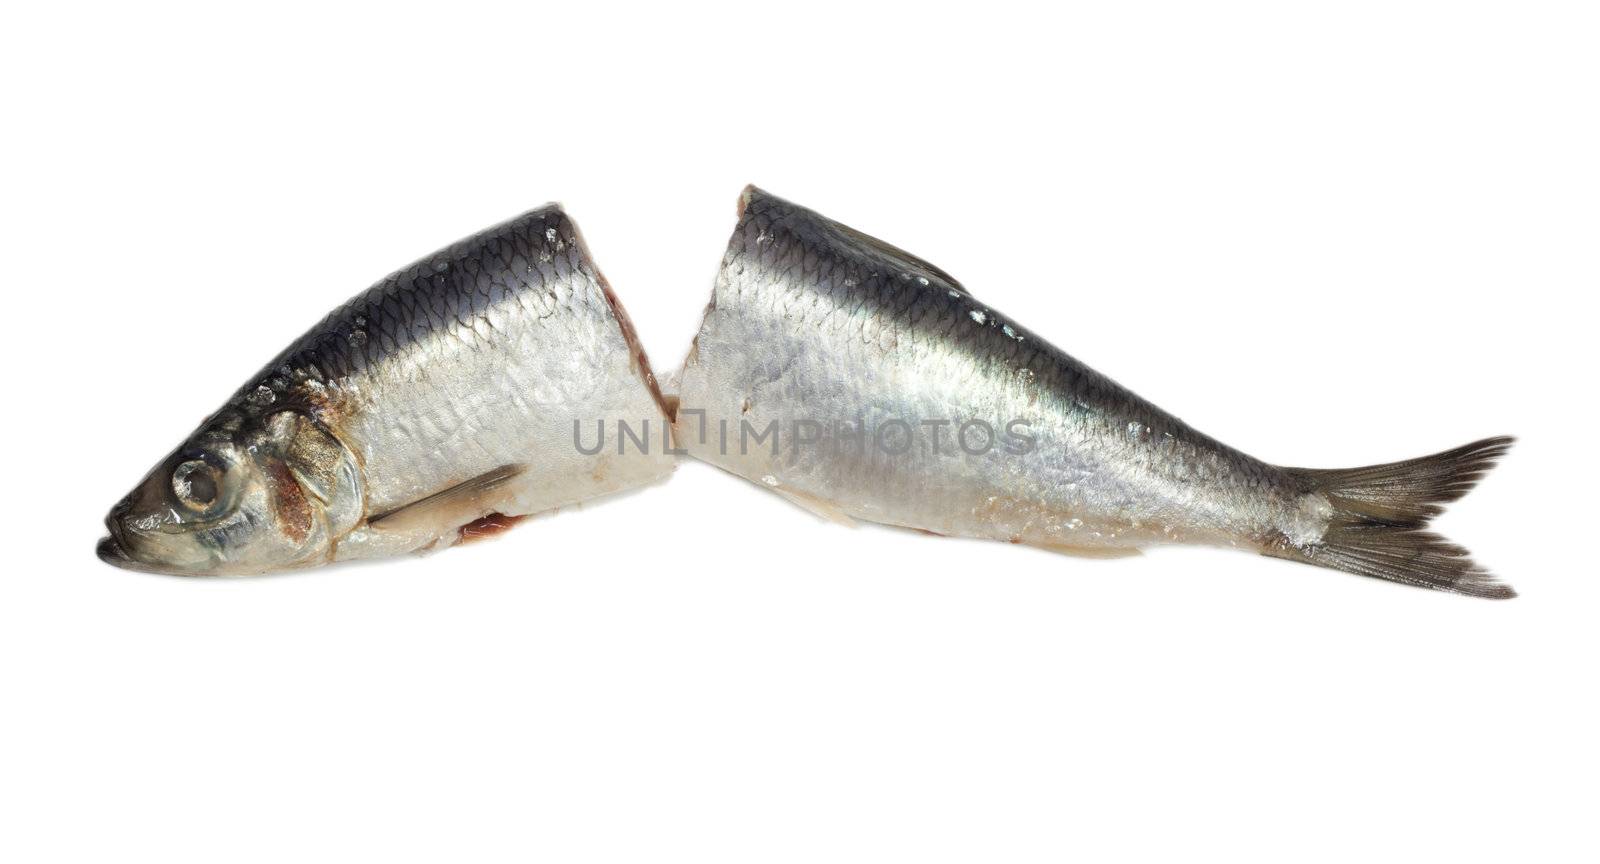 salted herring on white background 